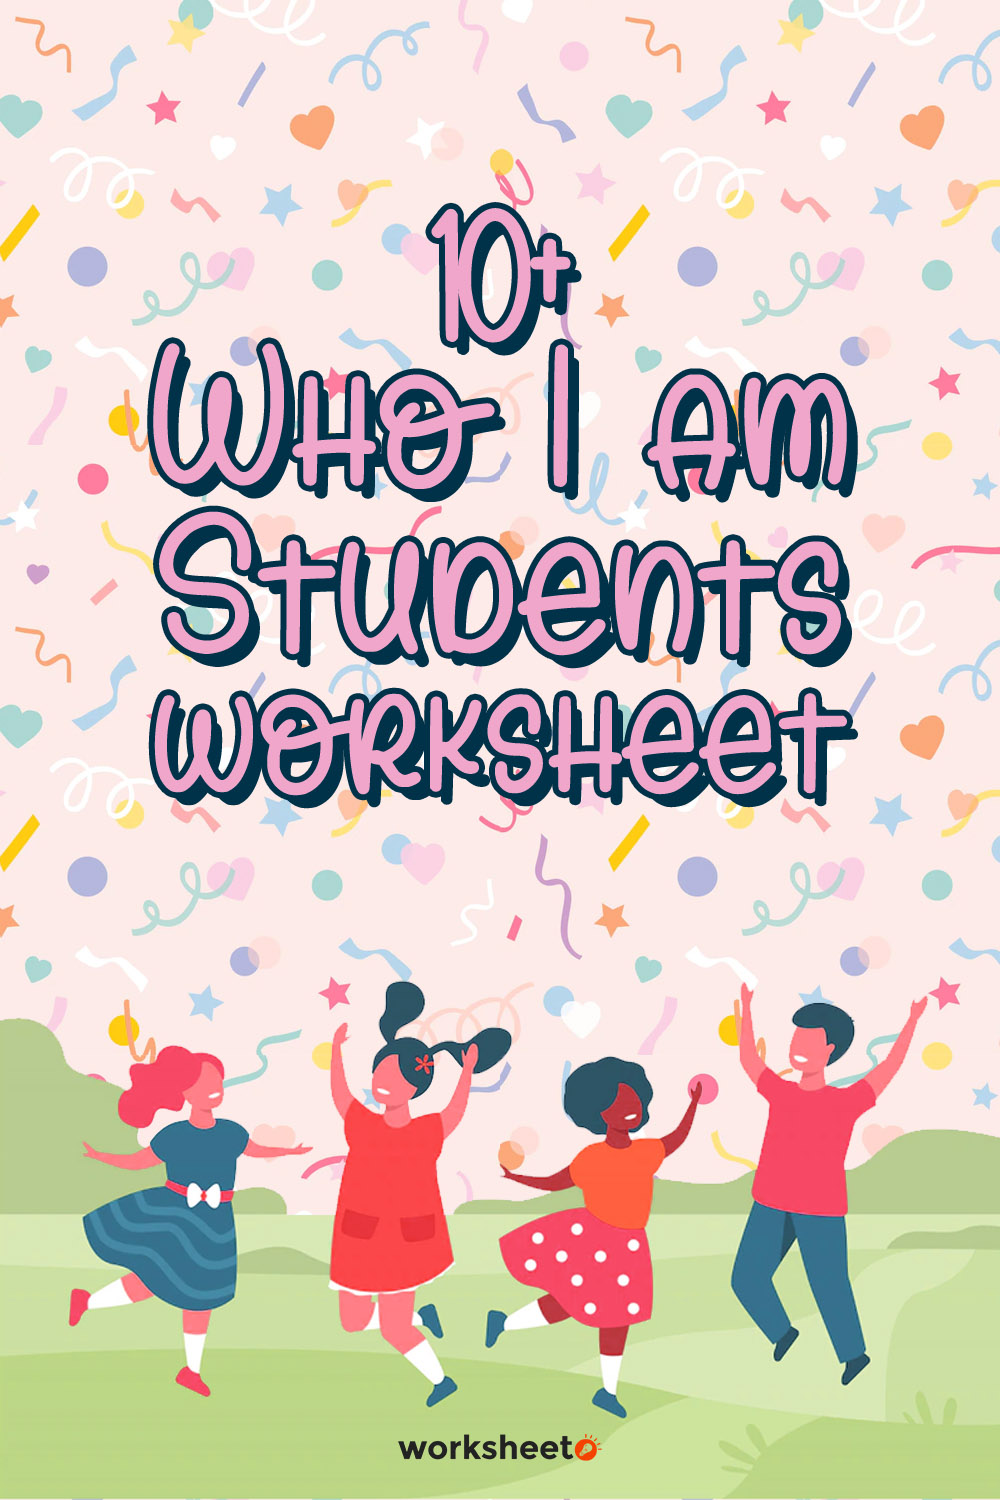 19 Images of Who I AM Student Worksheet